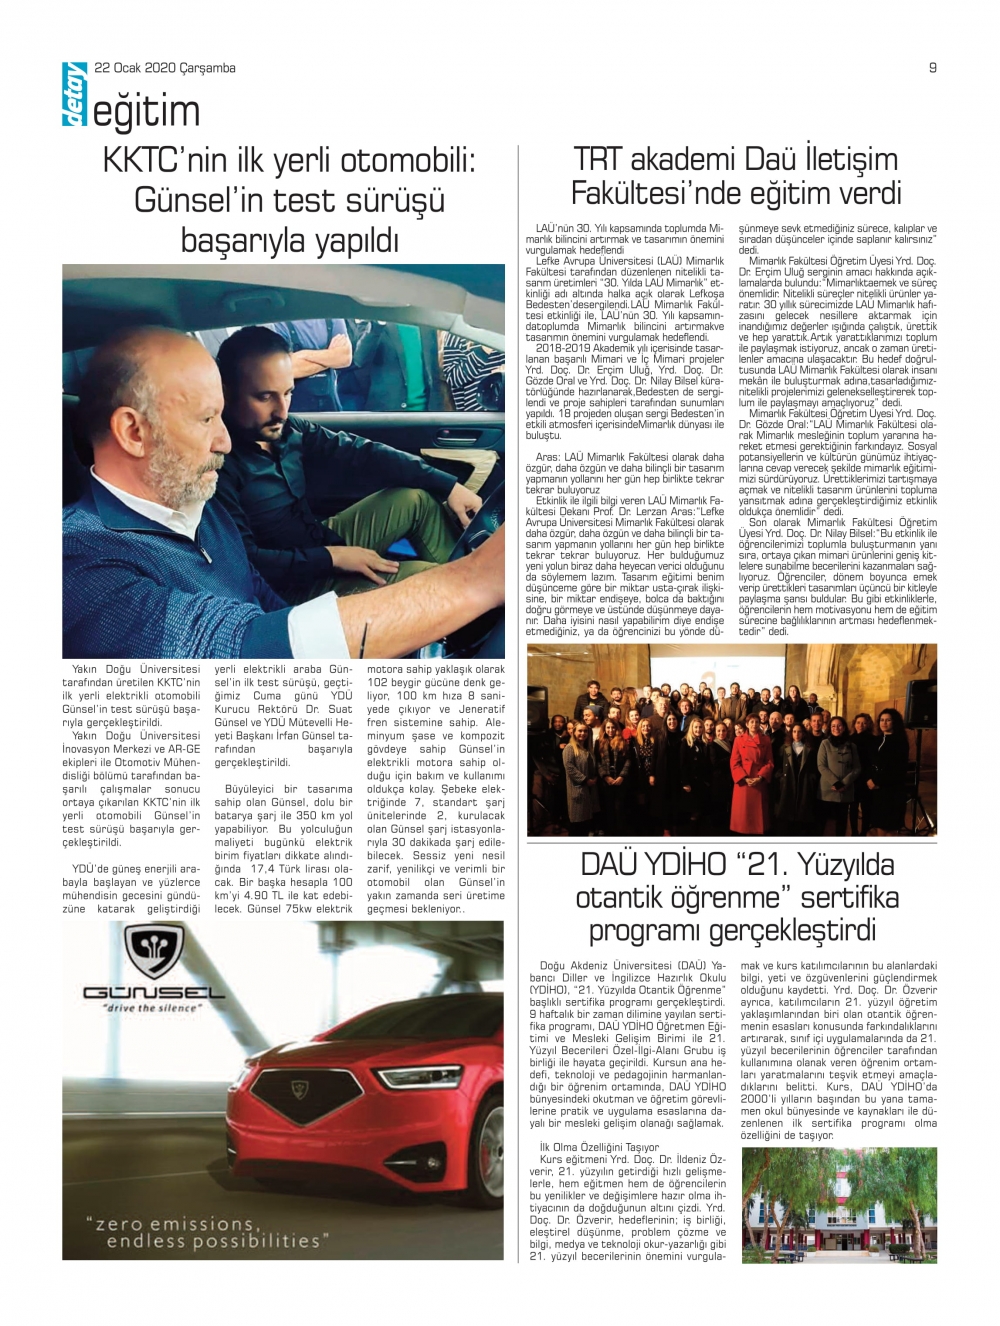 Detay Gazetes 22 Ocak 2020 galerisi resim 7